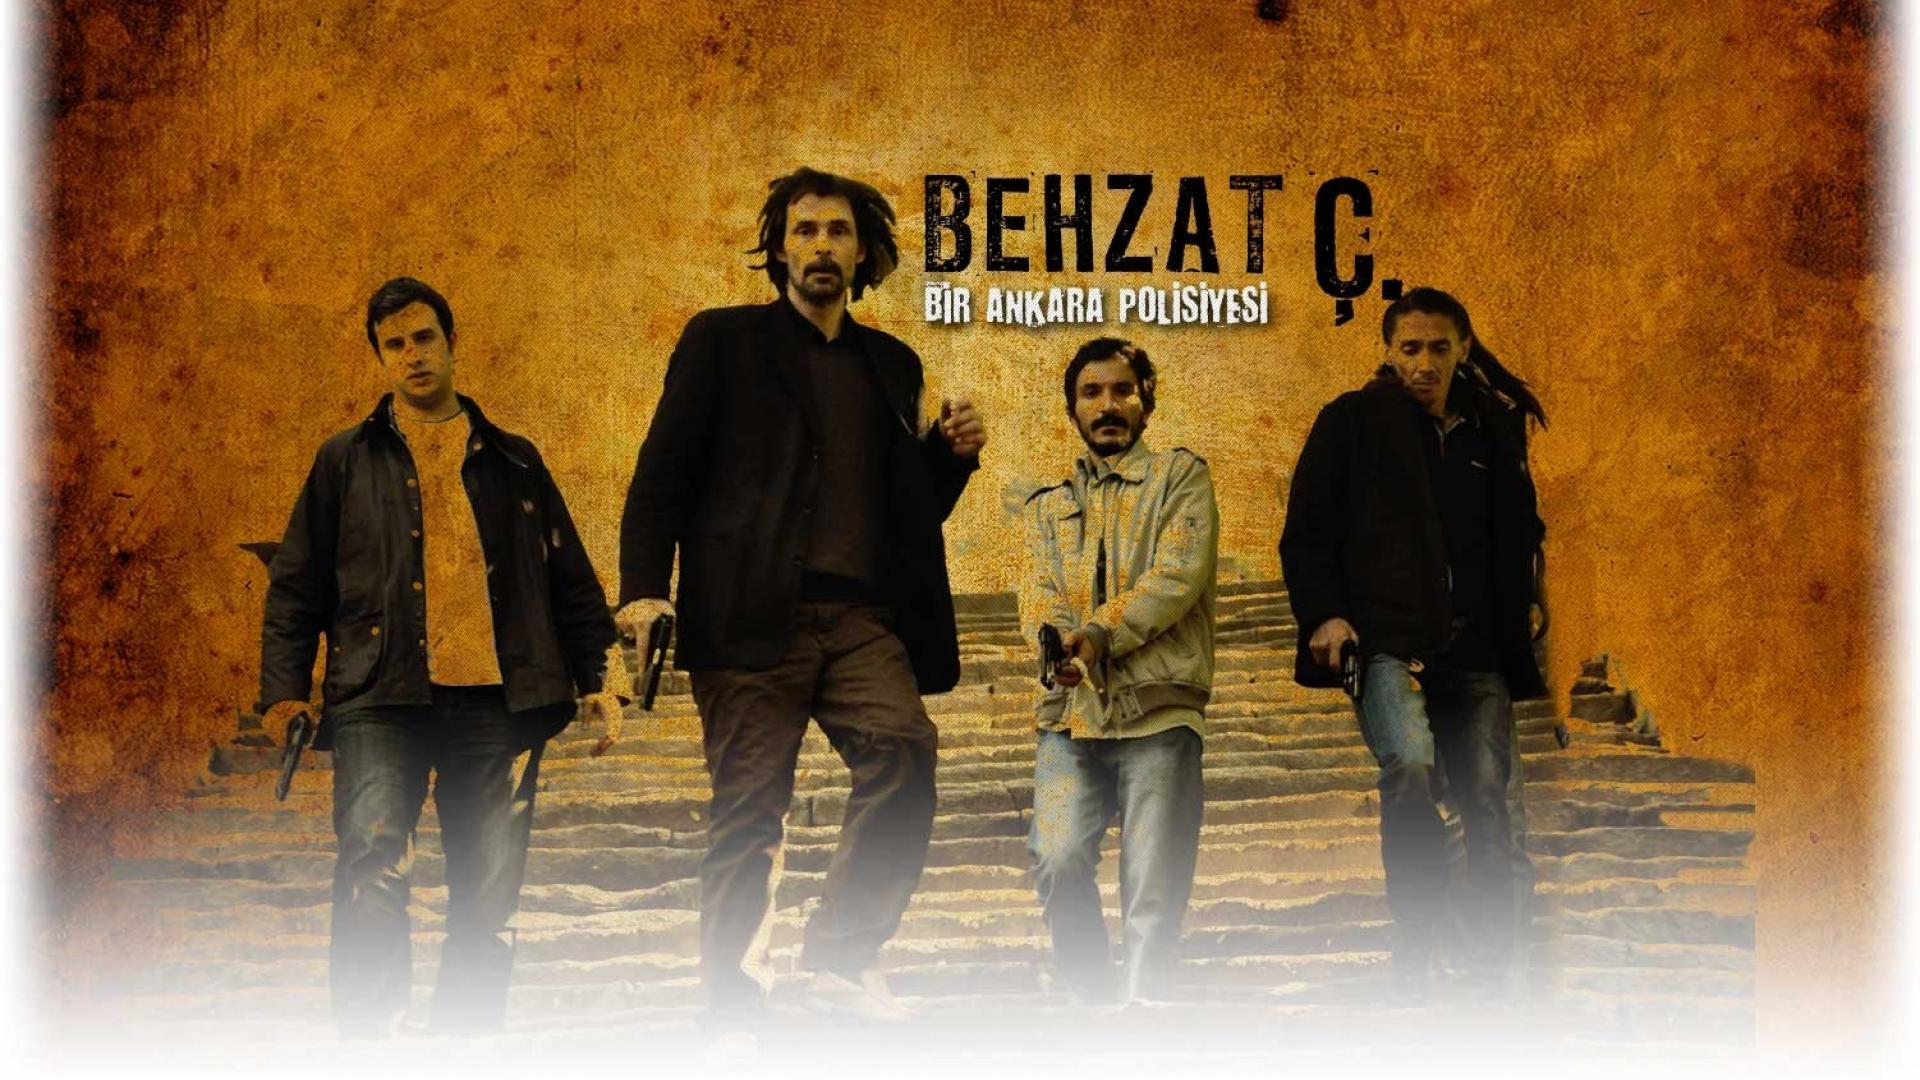 Posters Erdal Besikcioglu Behzat C Fatih Artman Wallpaper 4771